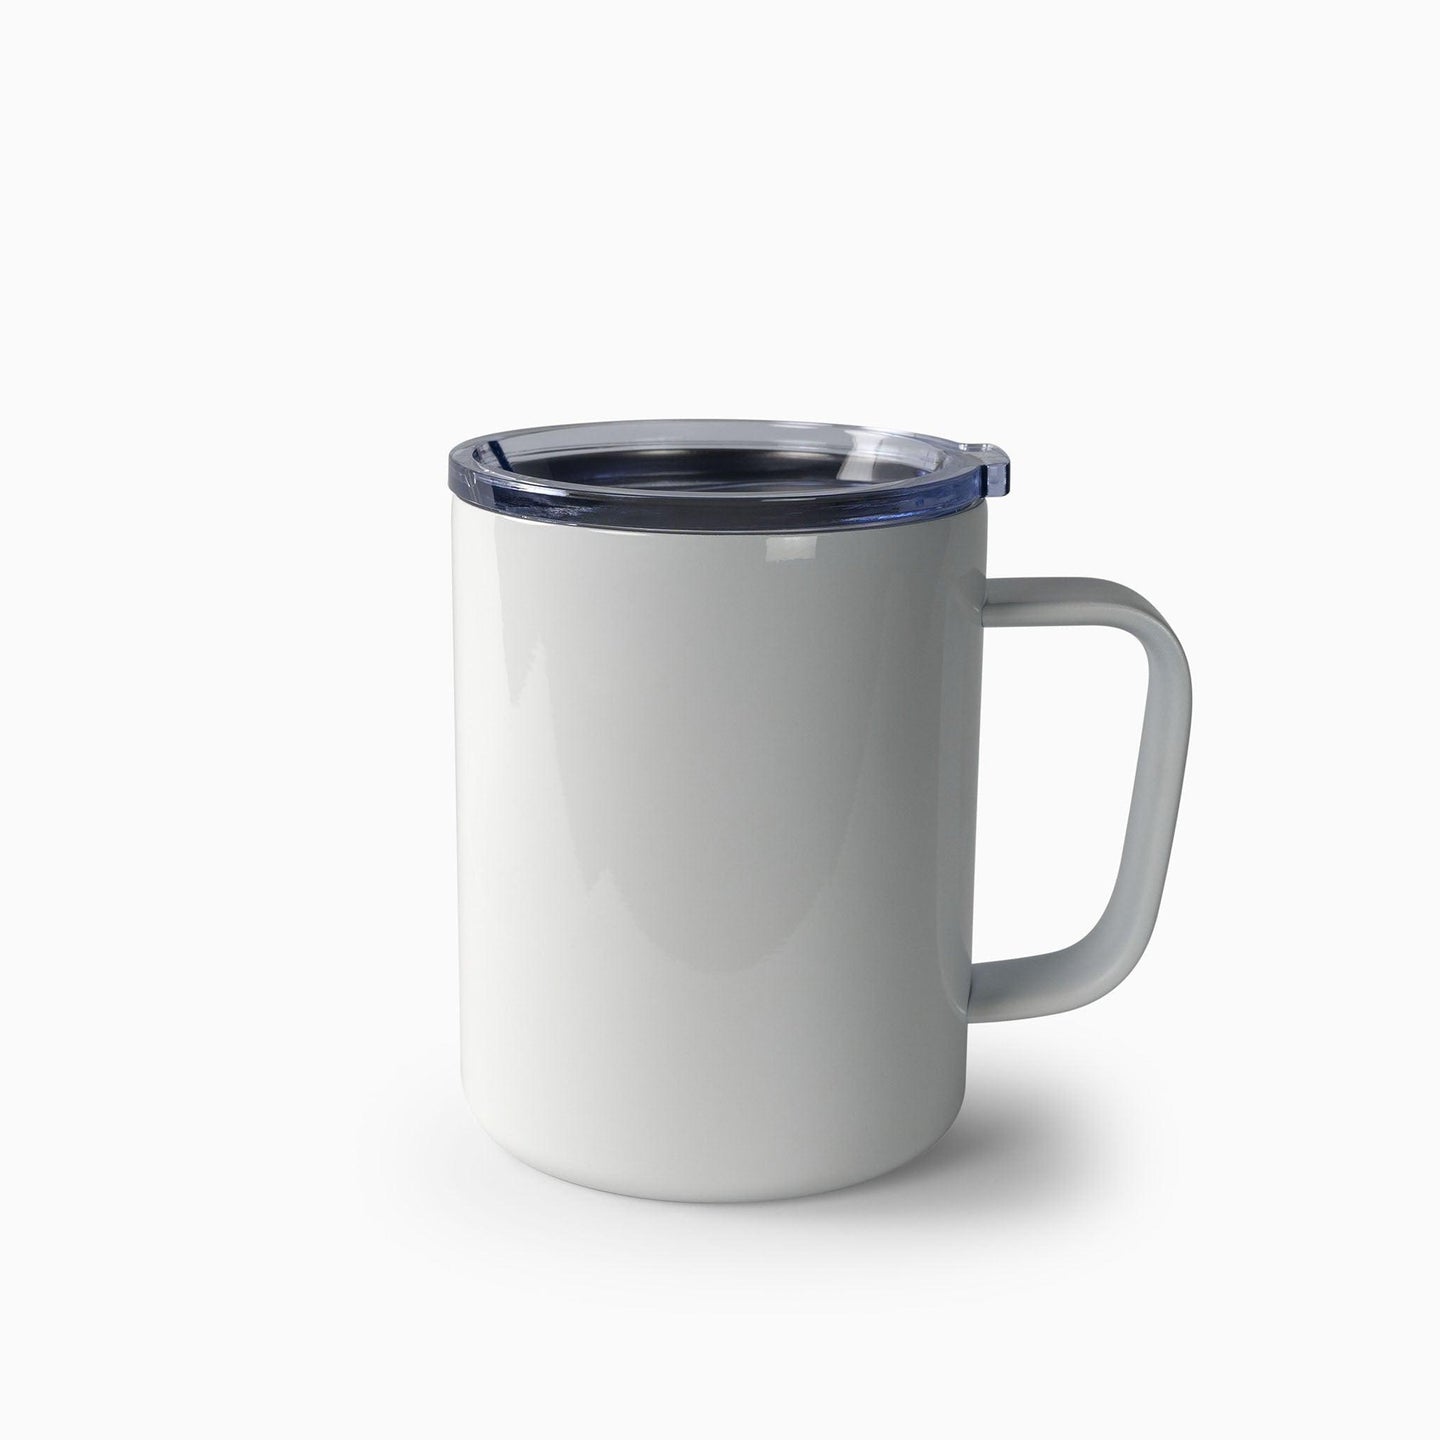 Saddle Tramp-10oz Insulated Coffee Mug - Metra Team Shop